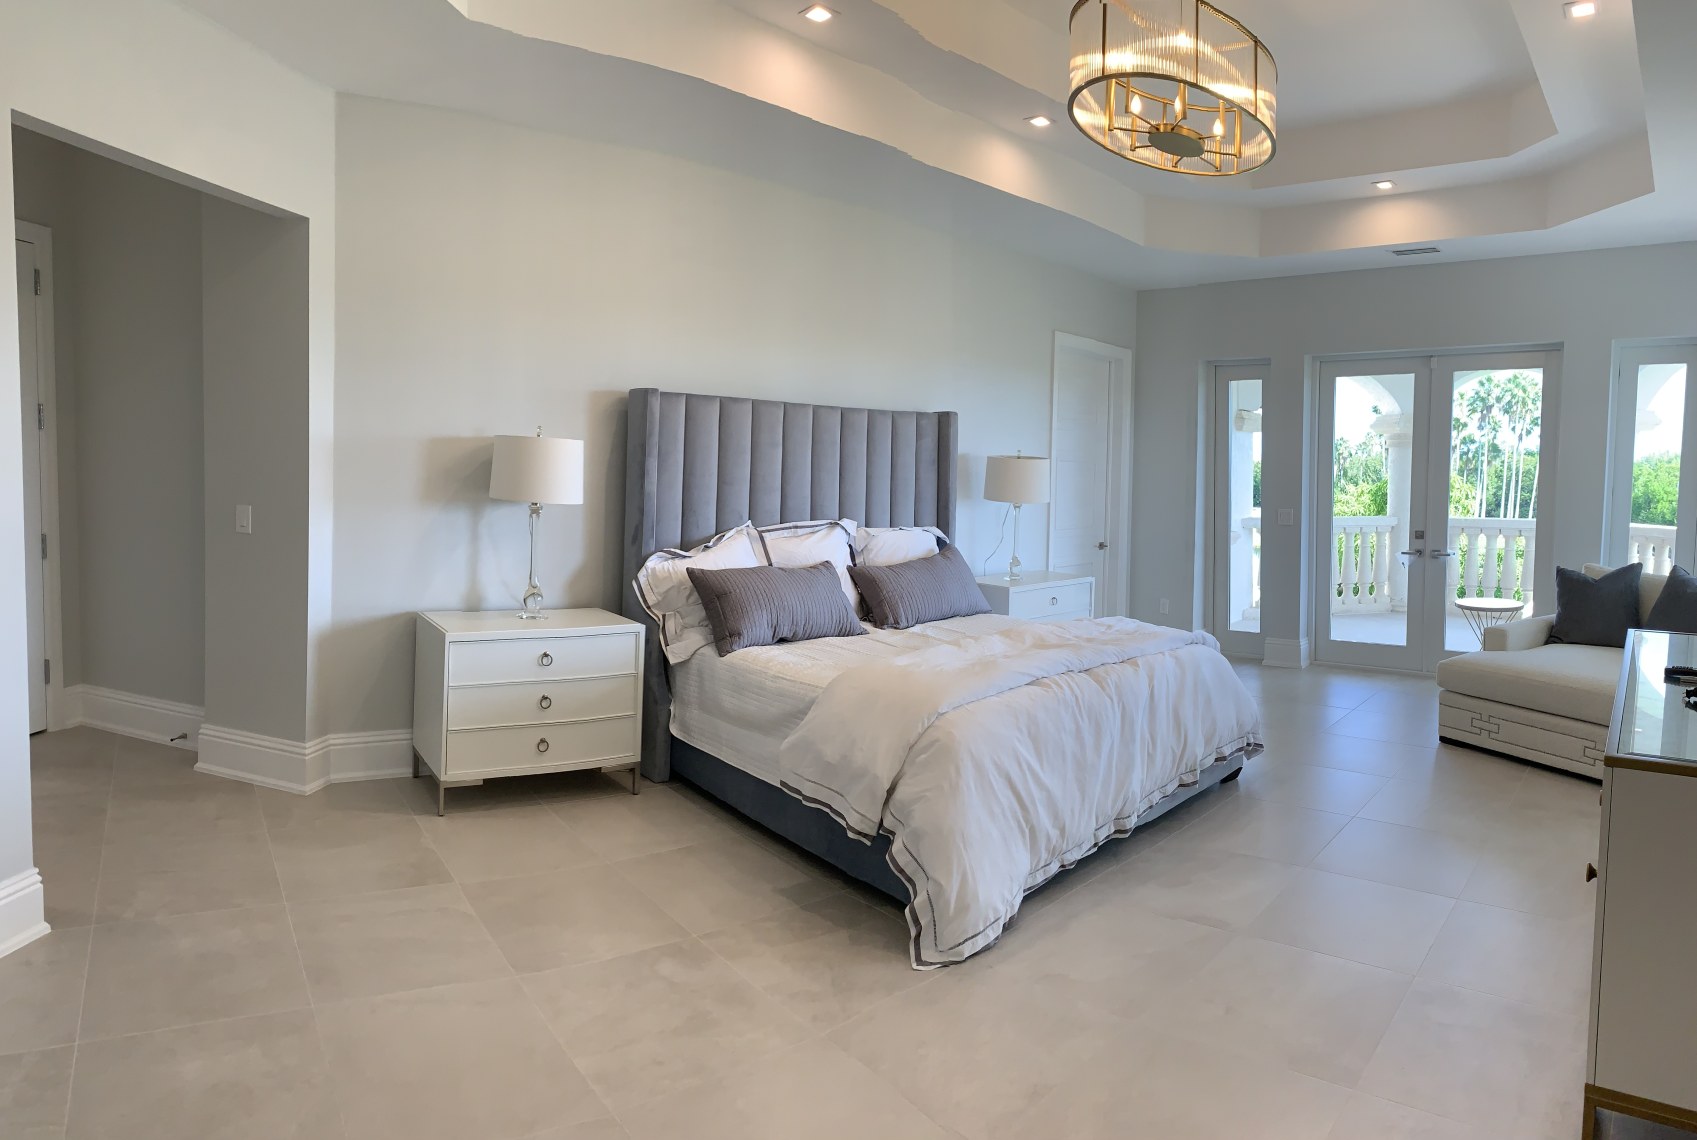 Remodeled master bedroom in Coral Gables, Florida